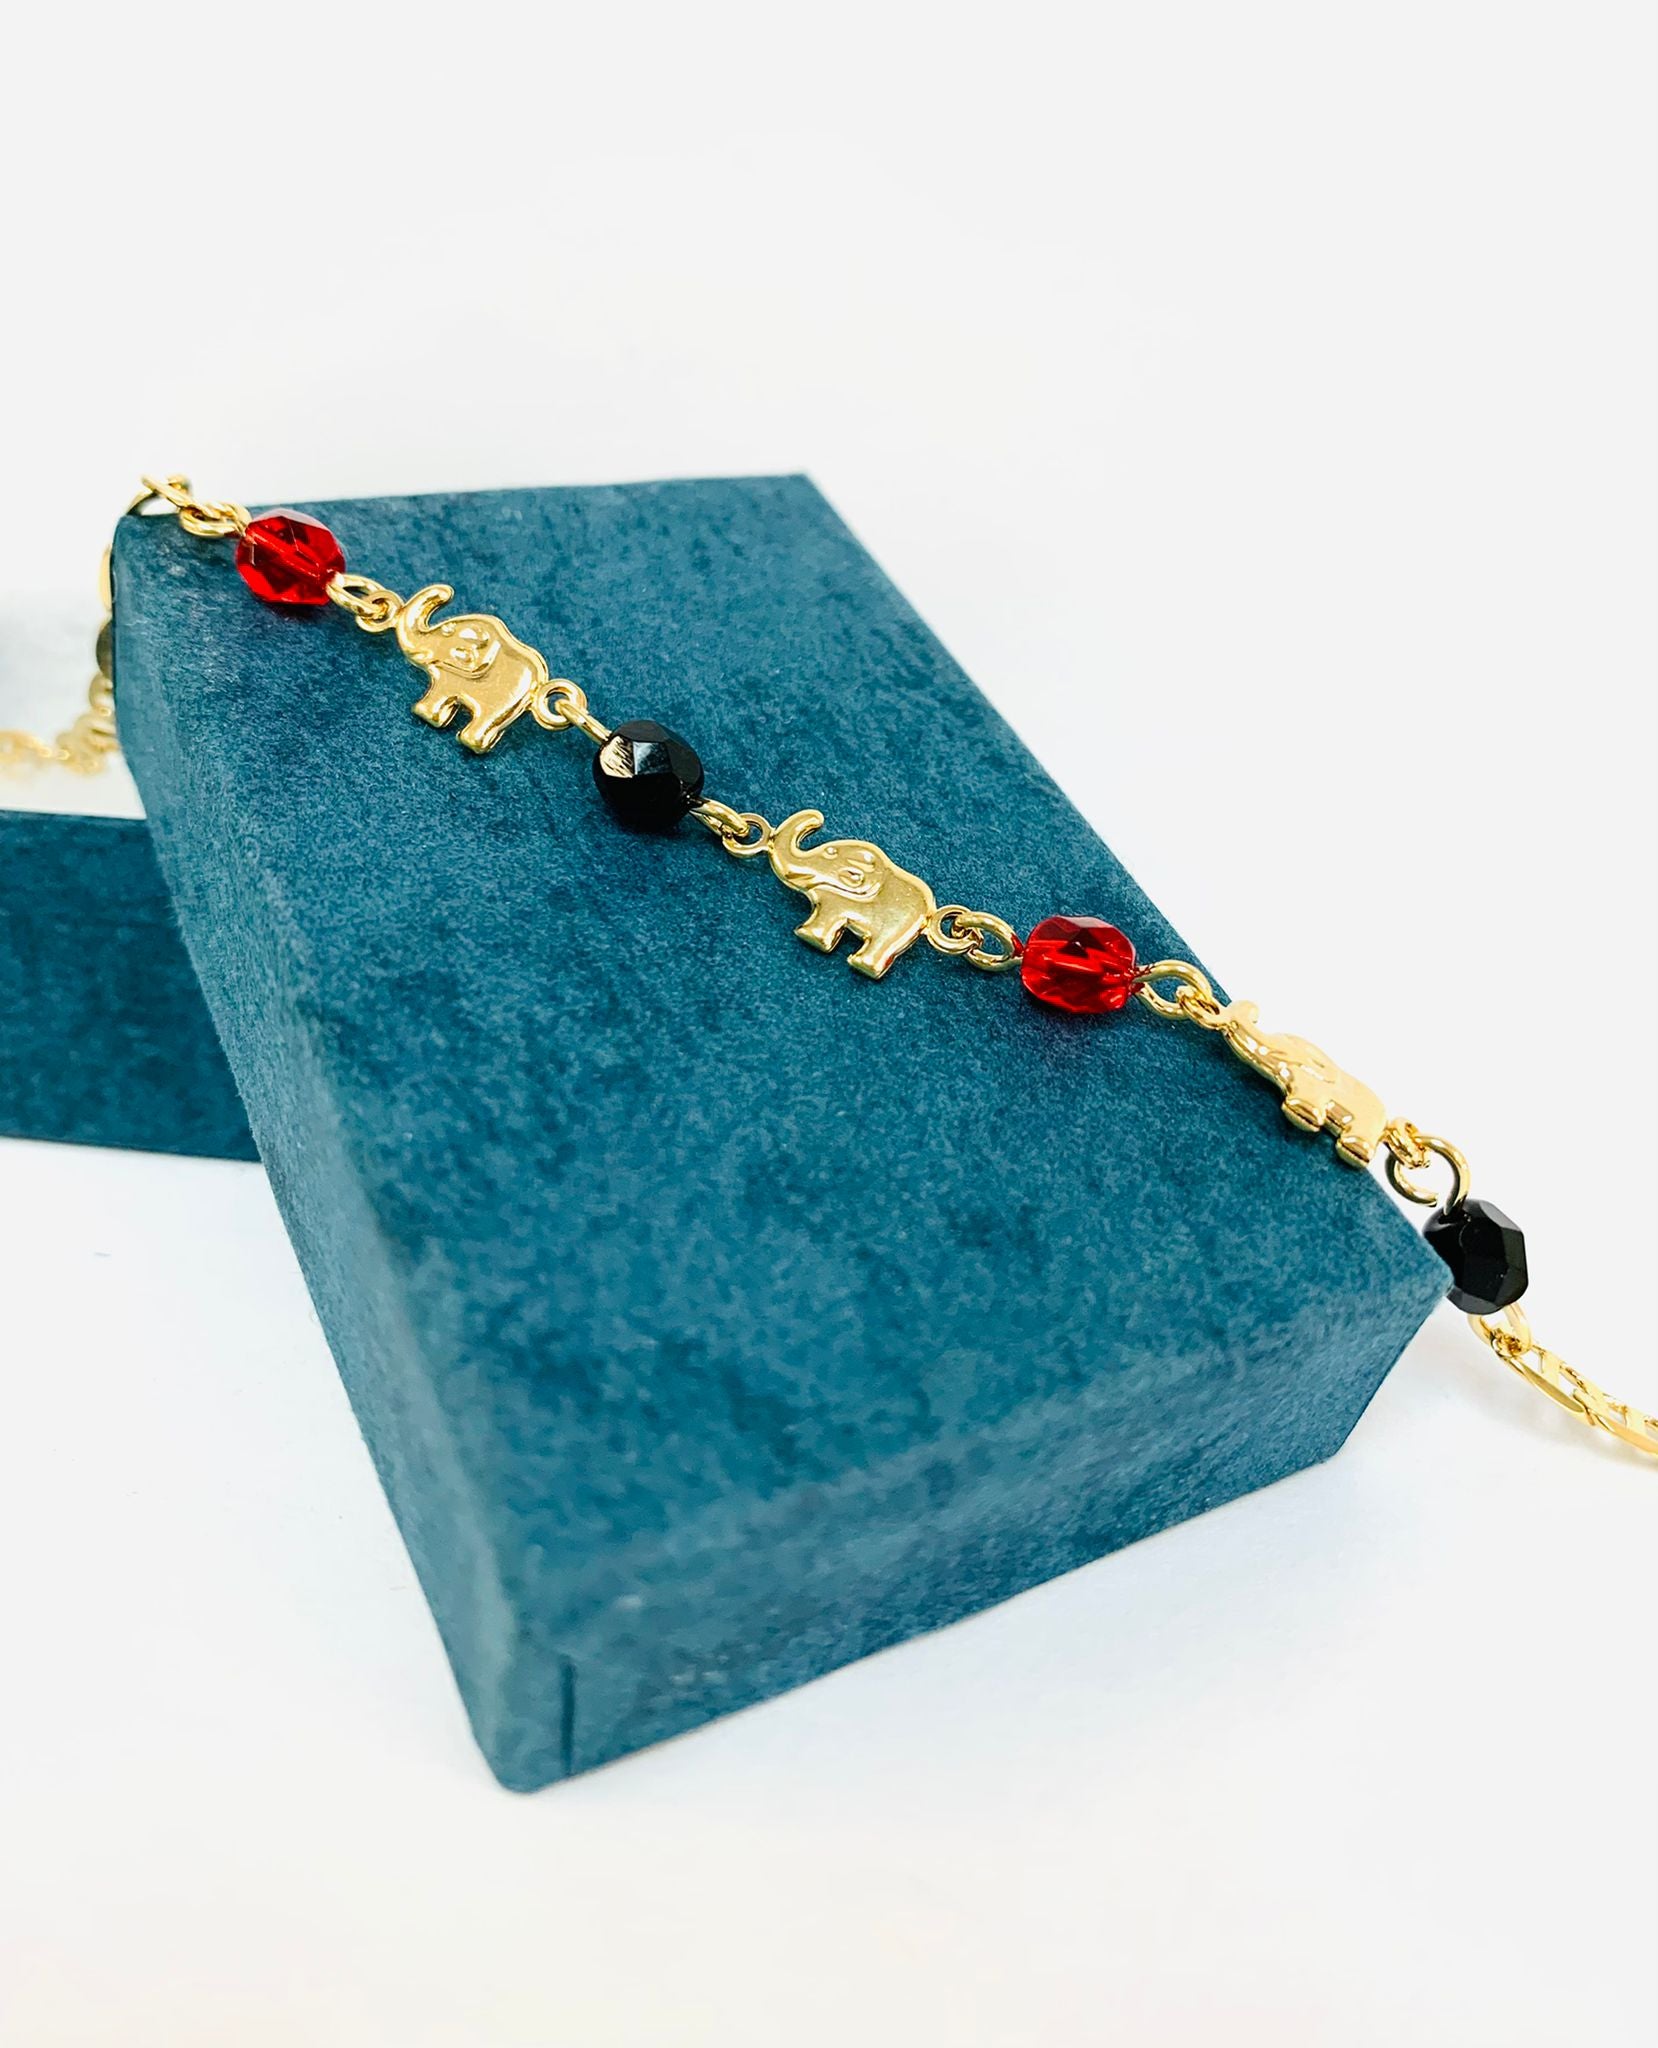 14k Gold Plated Black Clover Bracelet with Black Beads